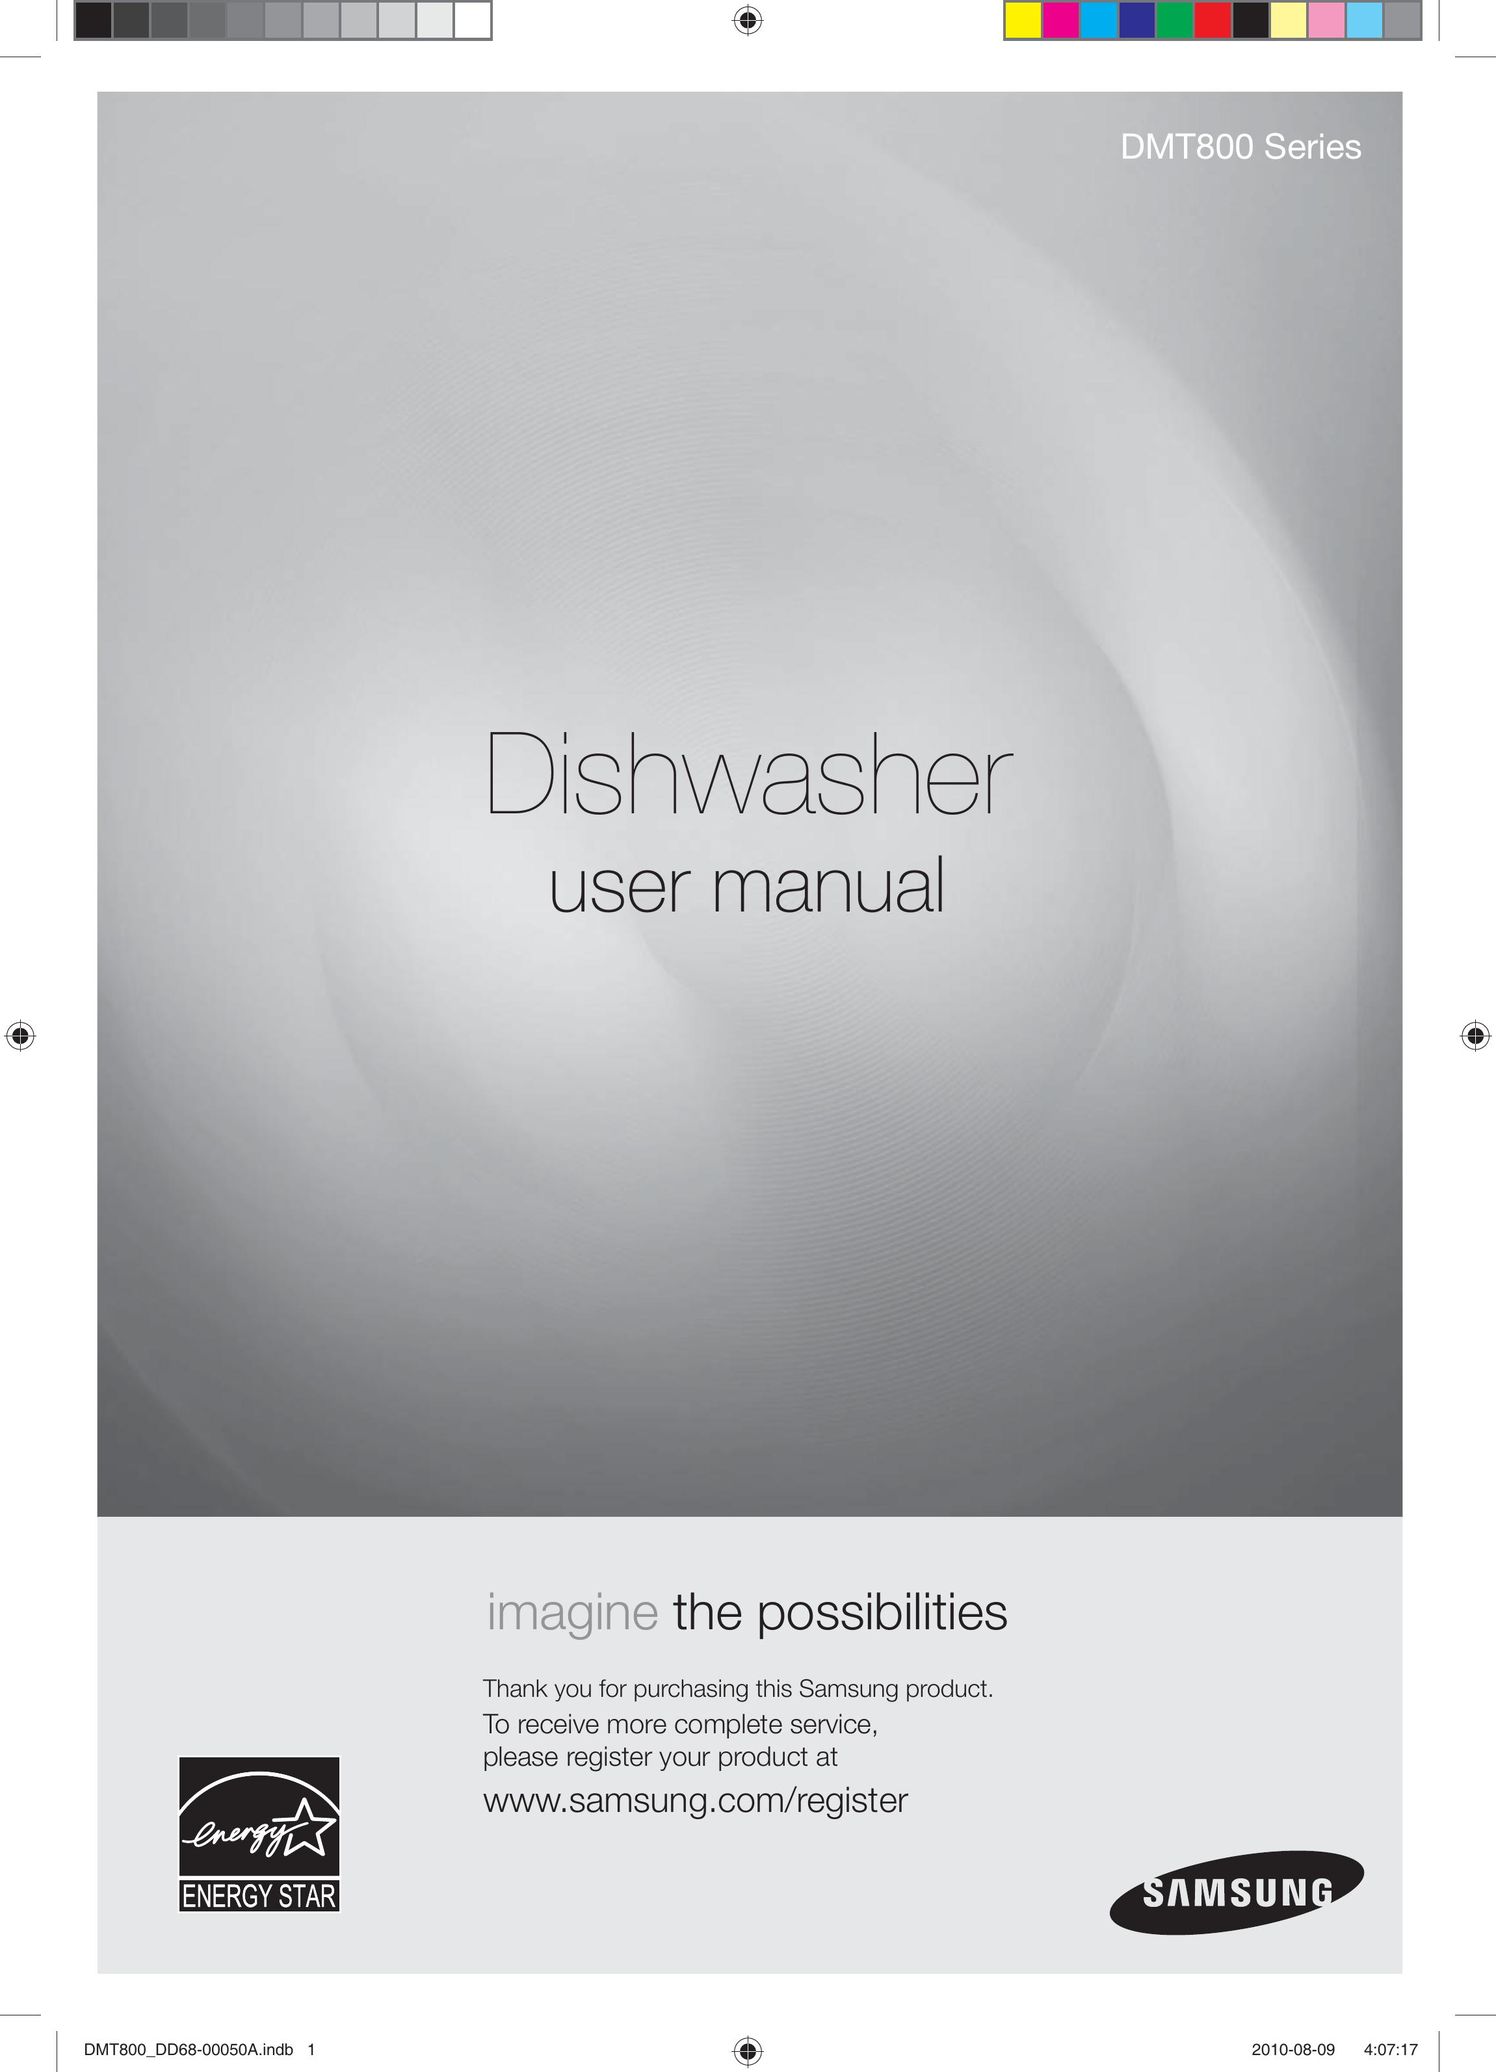 Samsung DMT800RHB Dishwasher User Manual